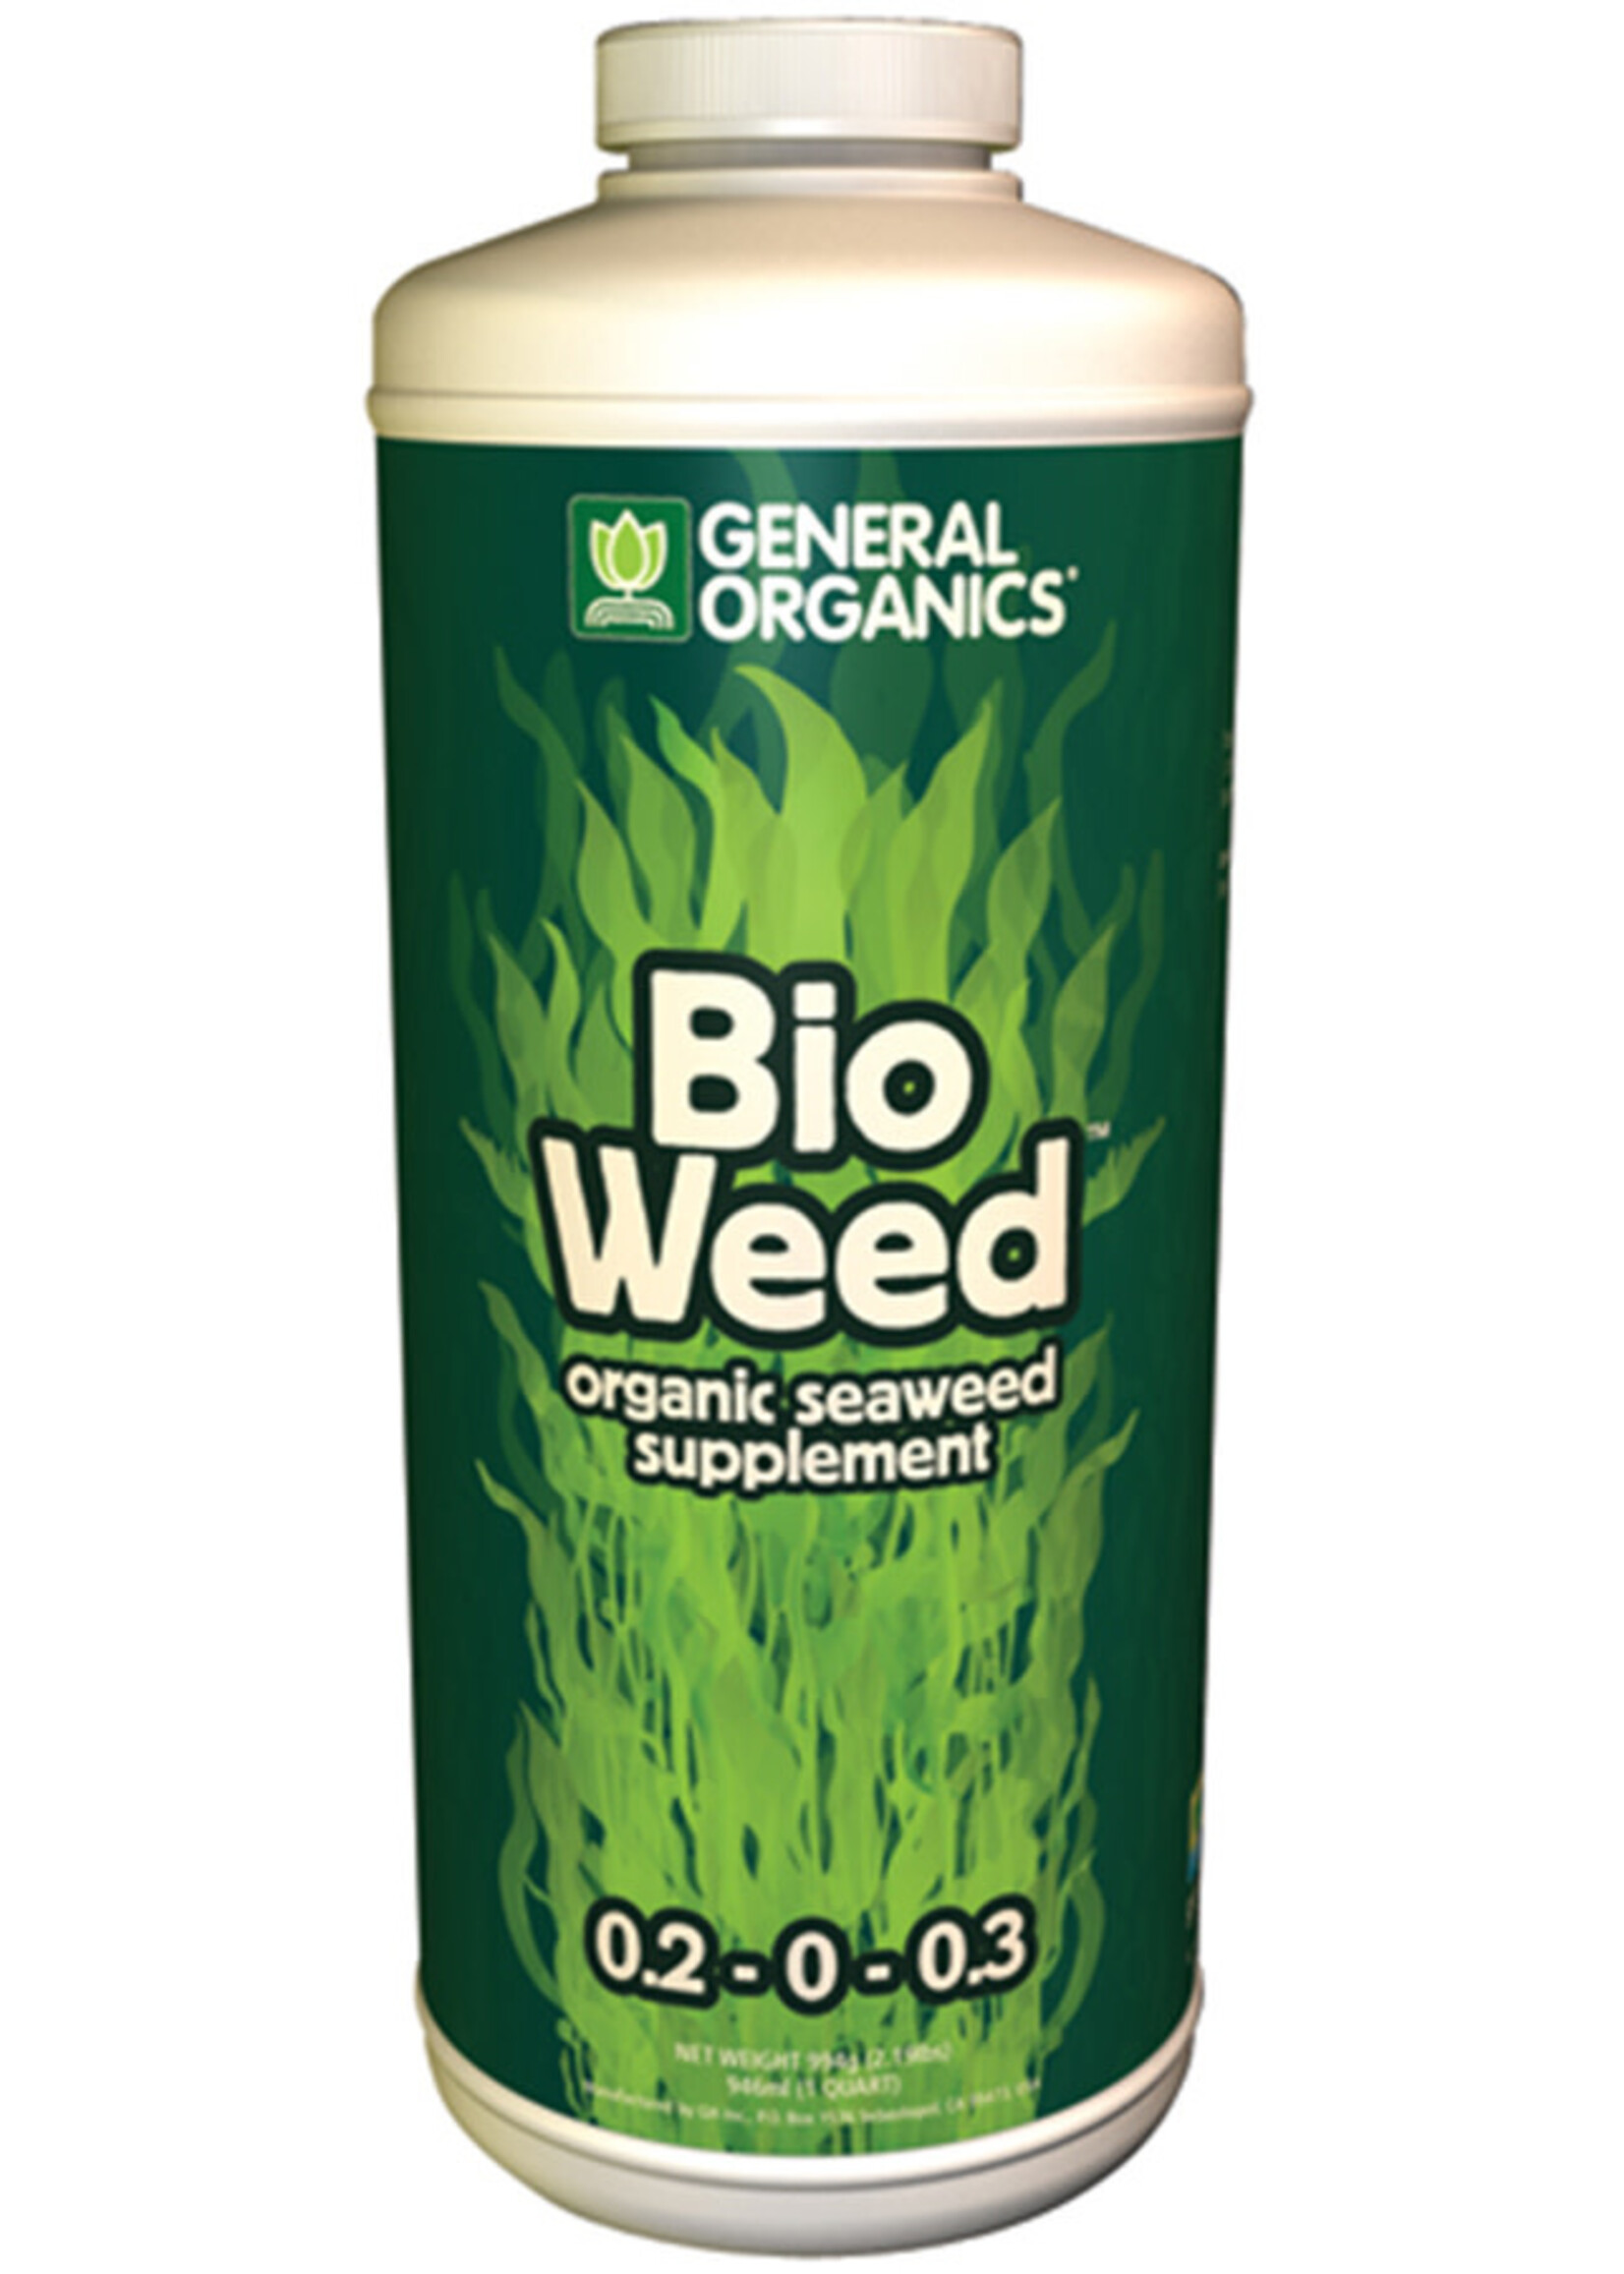 General Hydroponics GH General Organics BioWeed